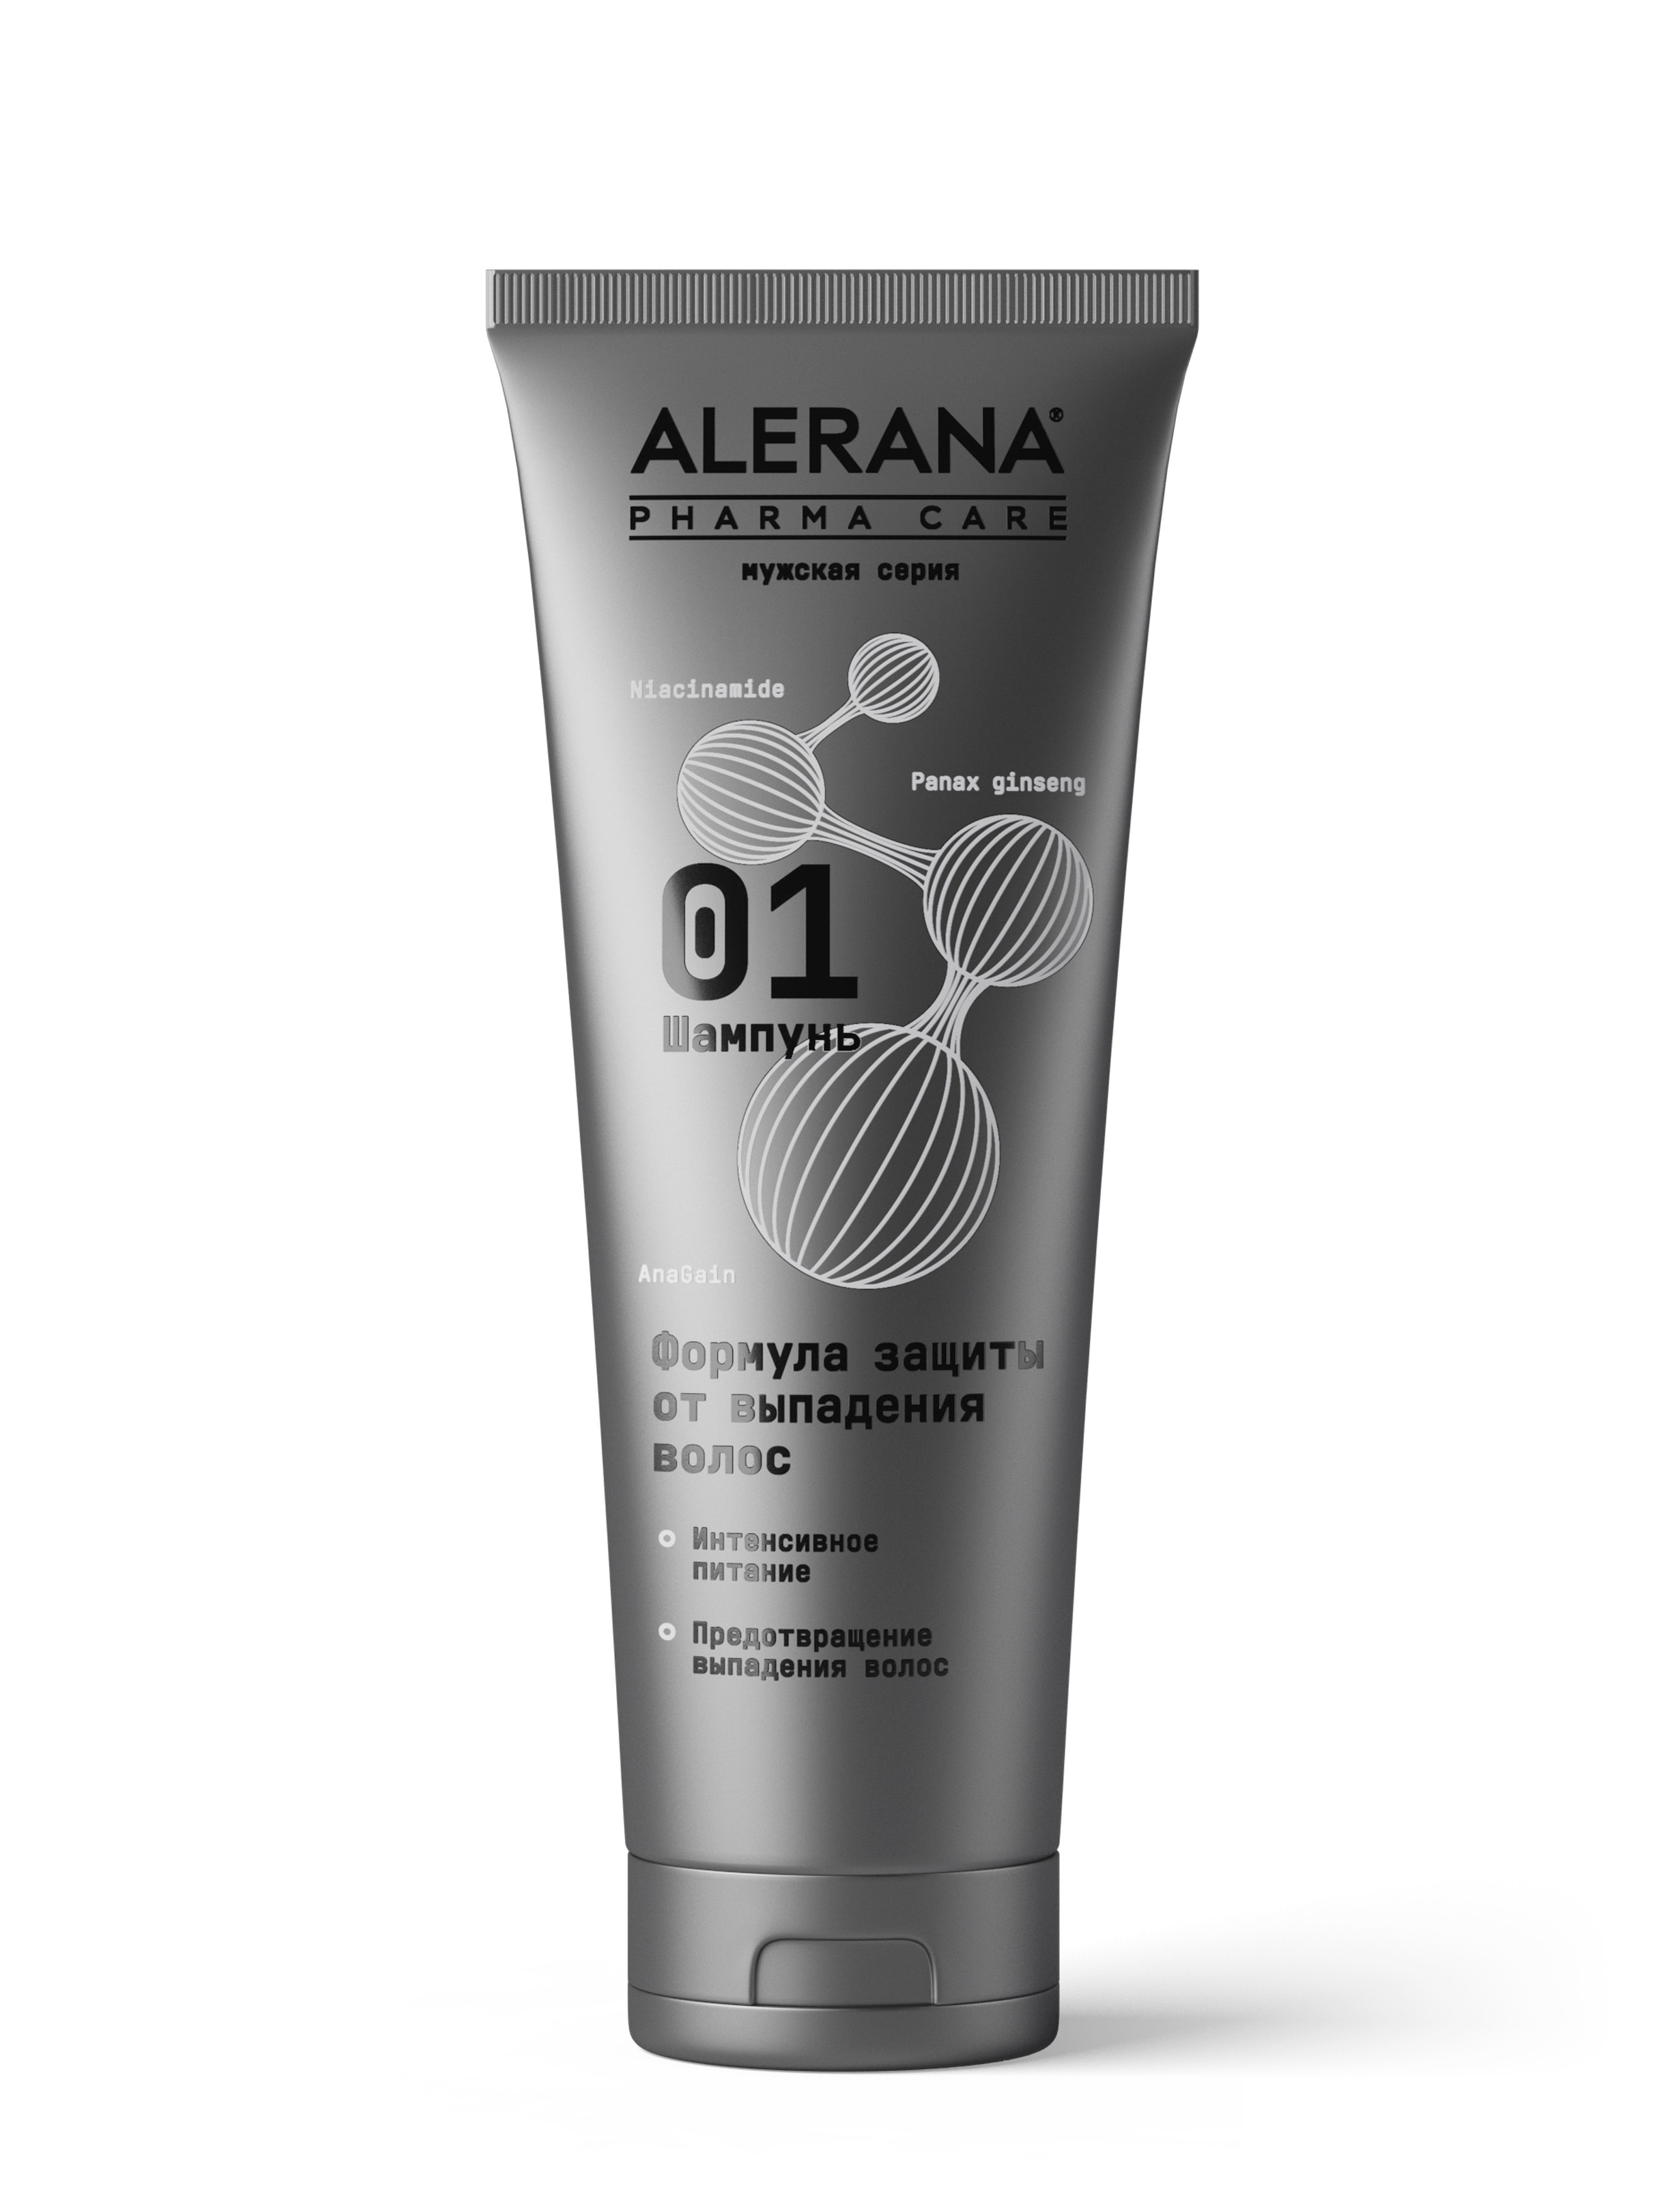 ALERANA<sup>®</sup> PHARMA CARE Shampoo – protection against hair loss for men